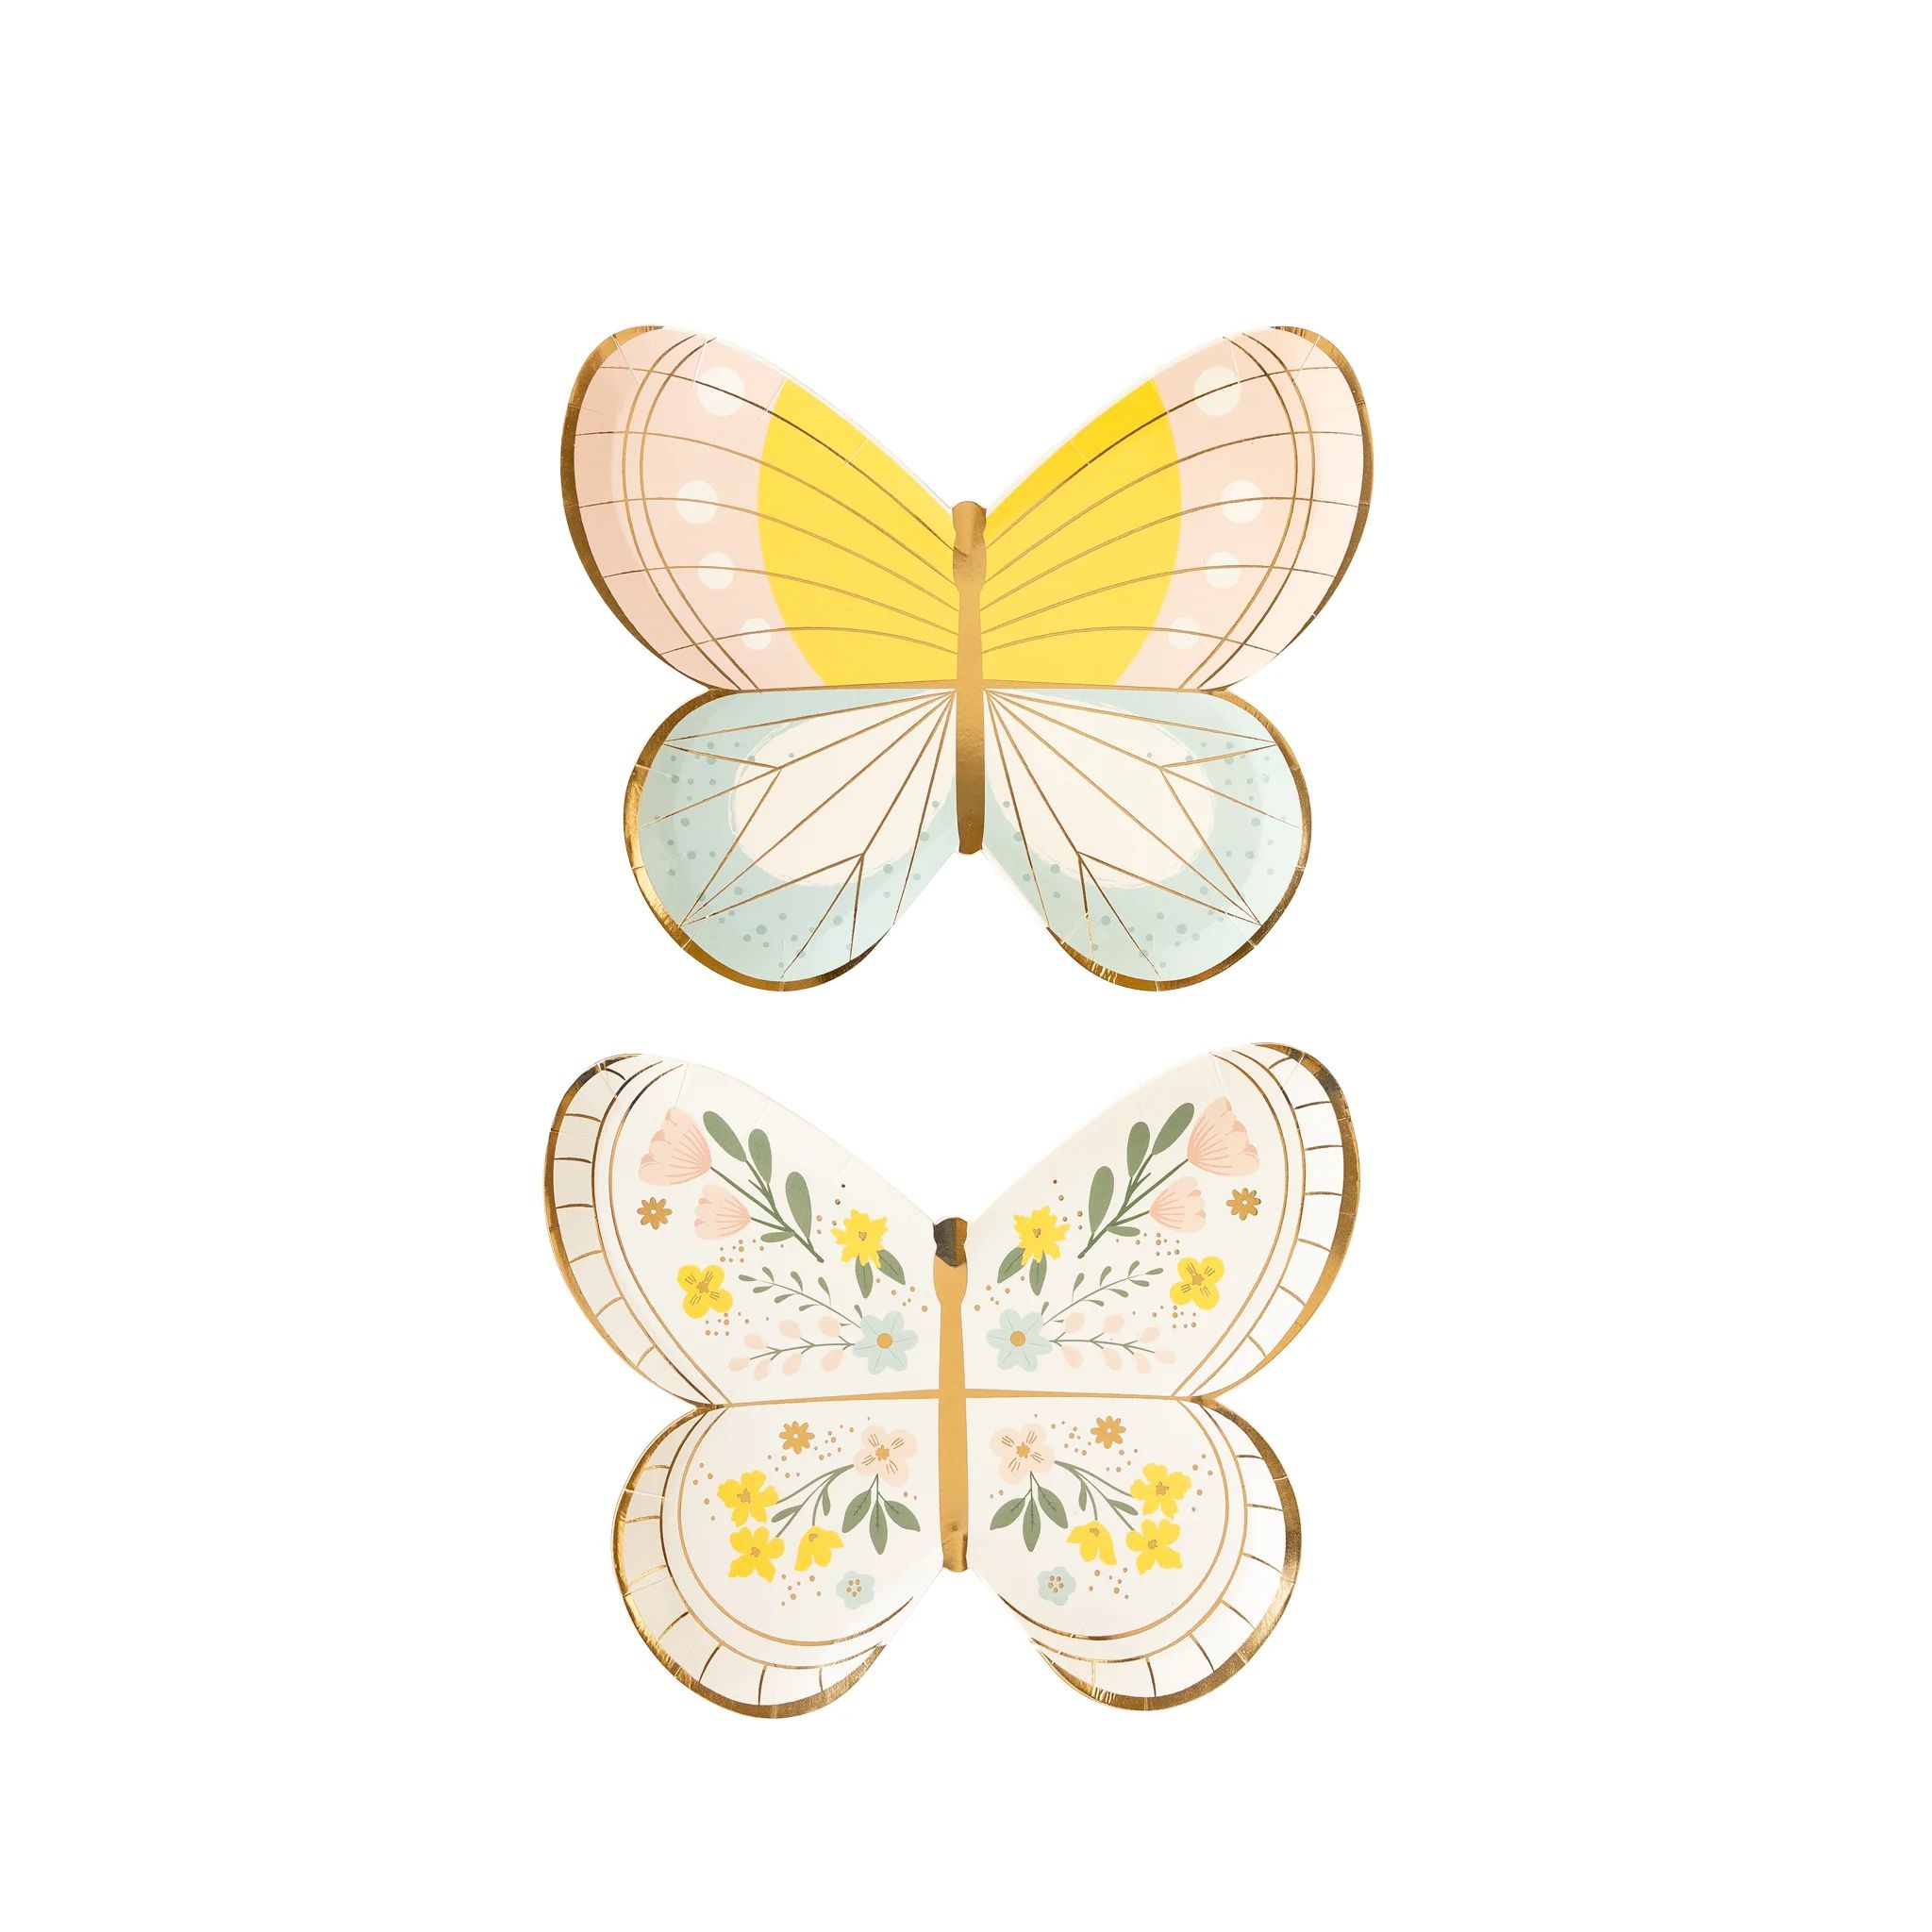 Butterfly Plates | My Mind's Eye